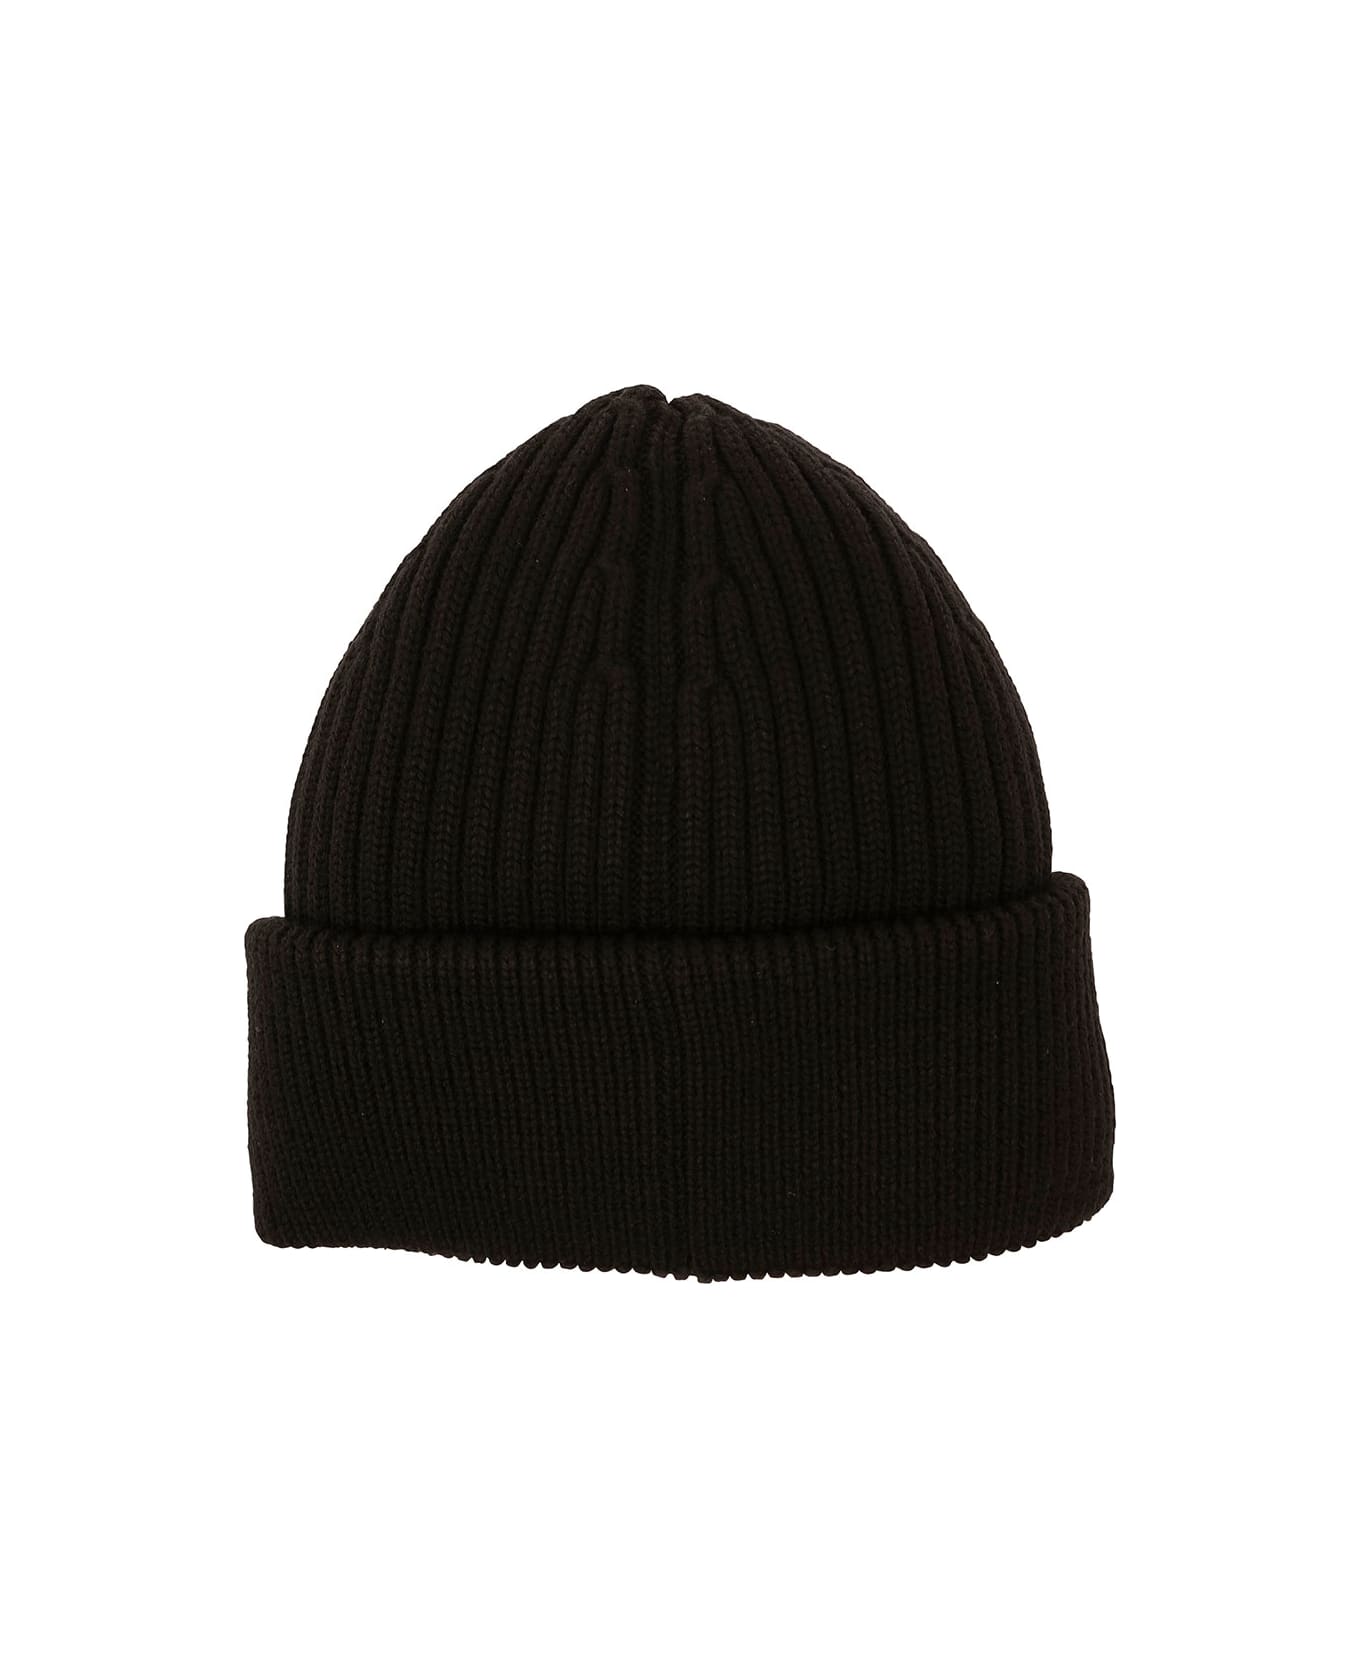 Moncler Grenoble Hat - Black